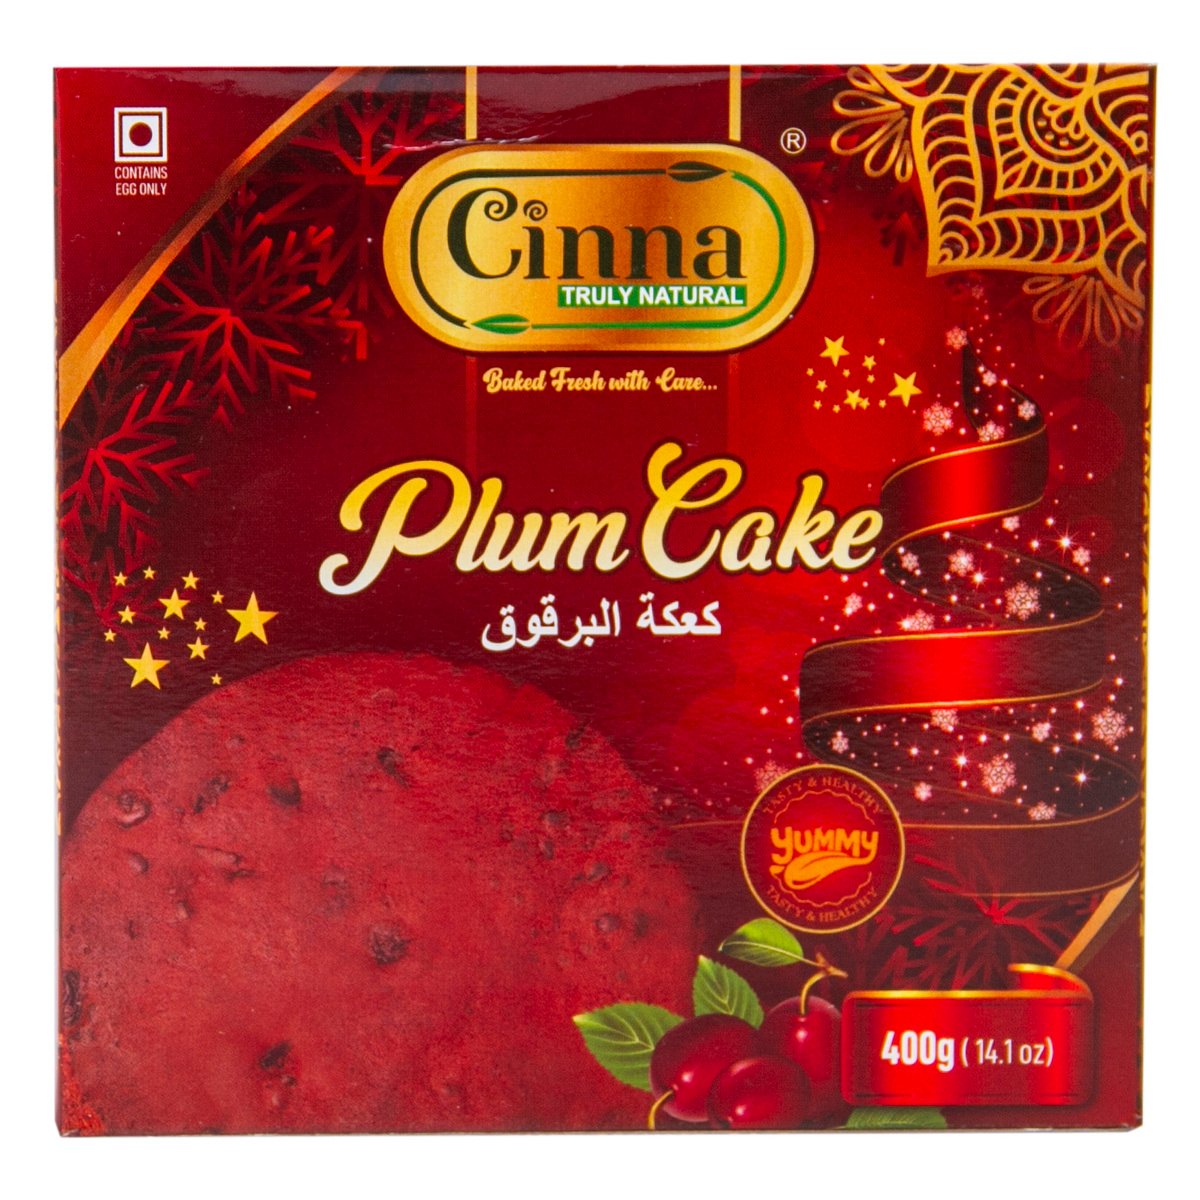 Cinna Plum Cake 400 g